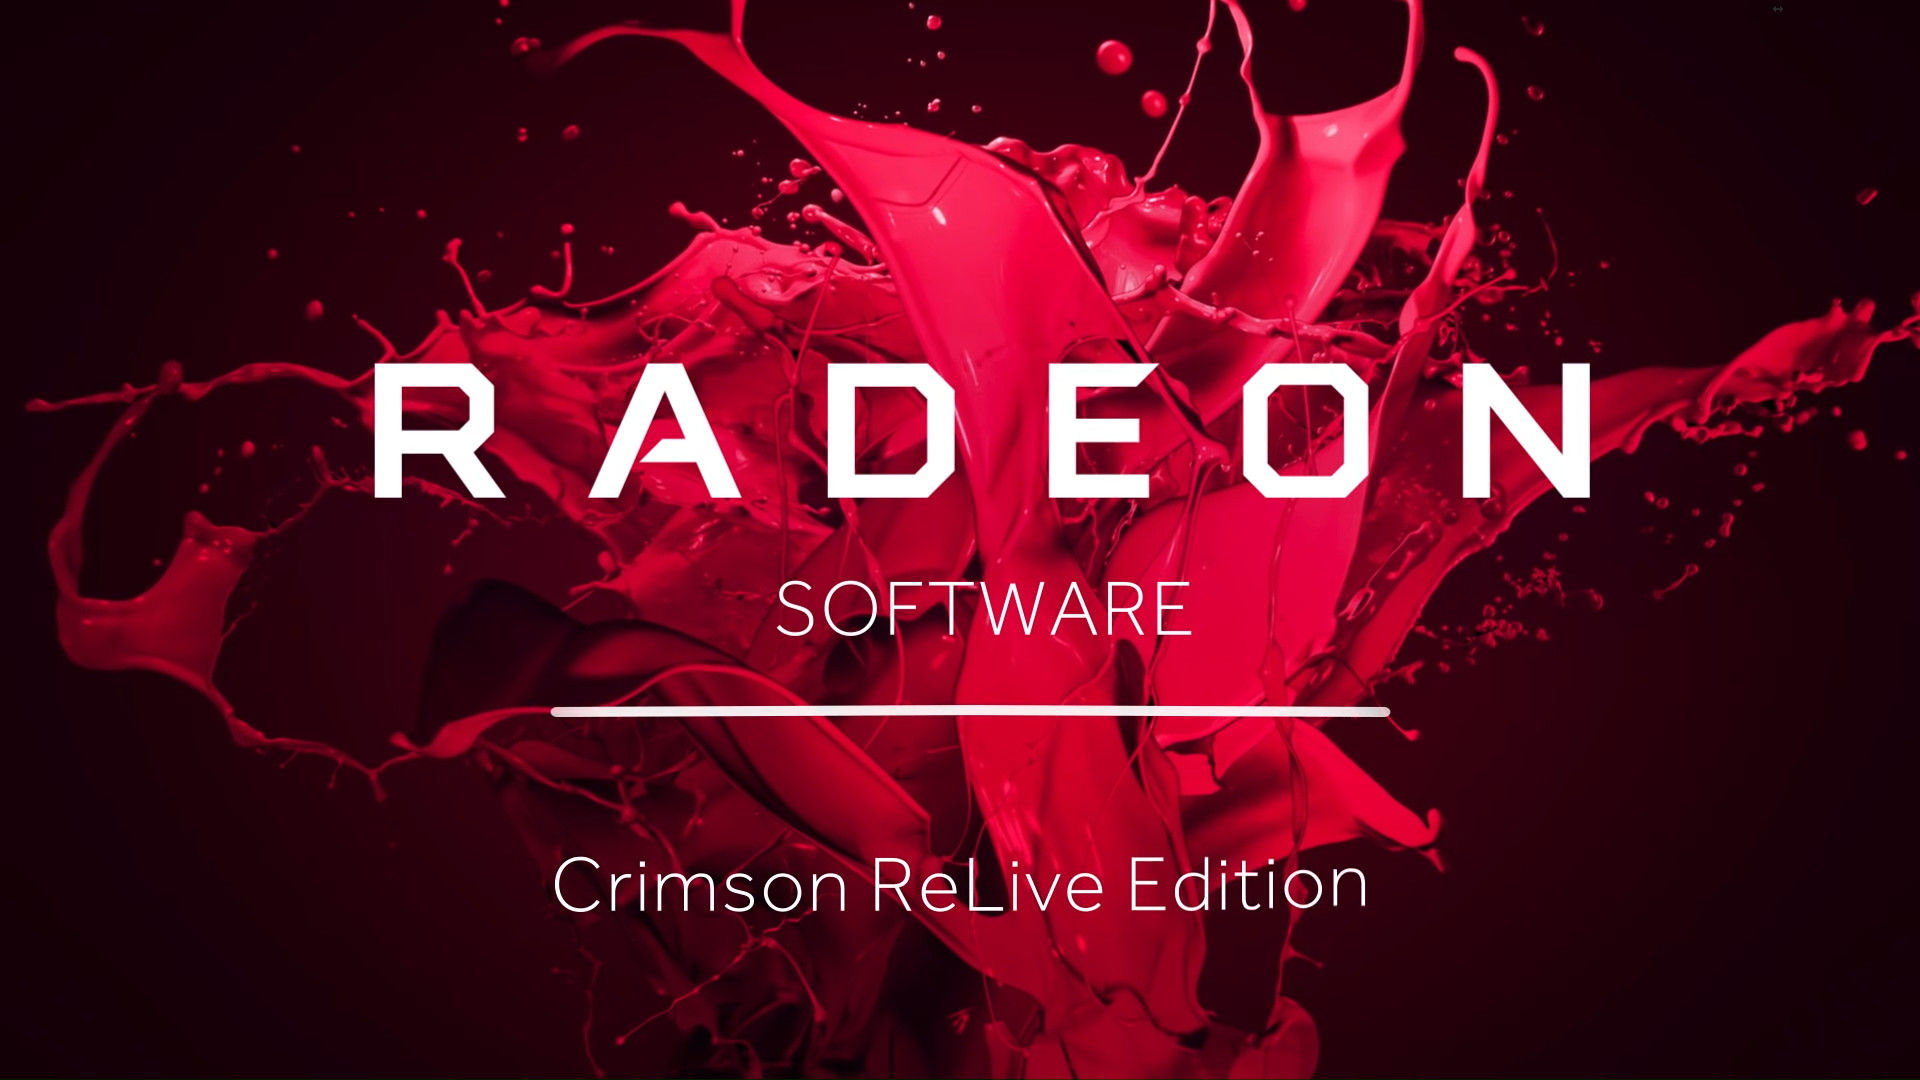 Radeon Software Crimson ReLive Edition w/ Red Splash